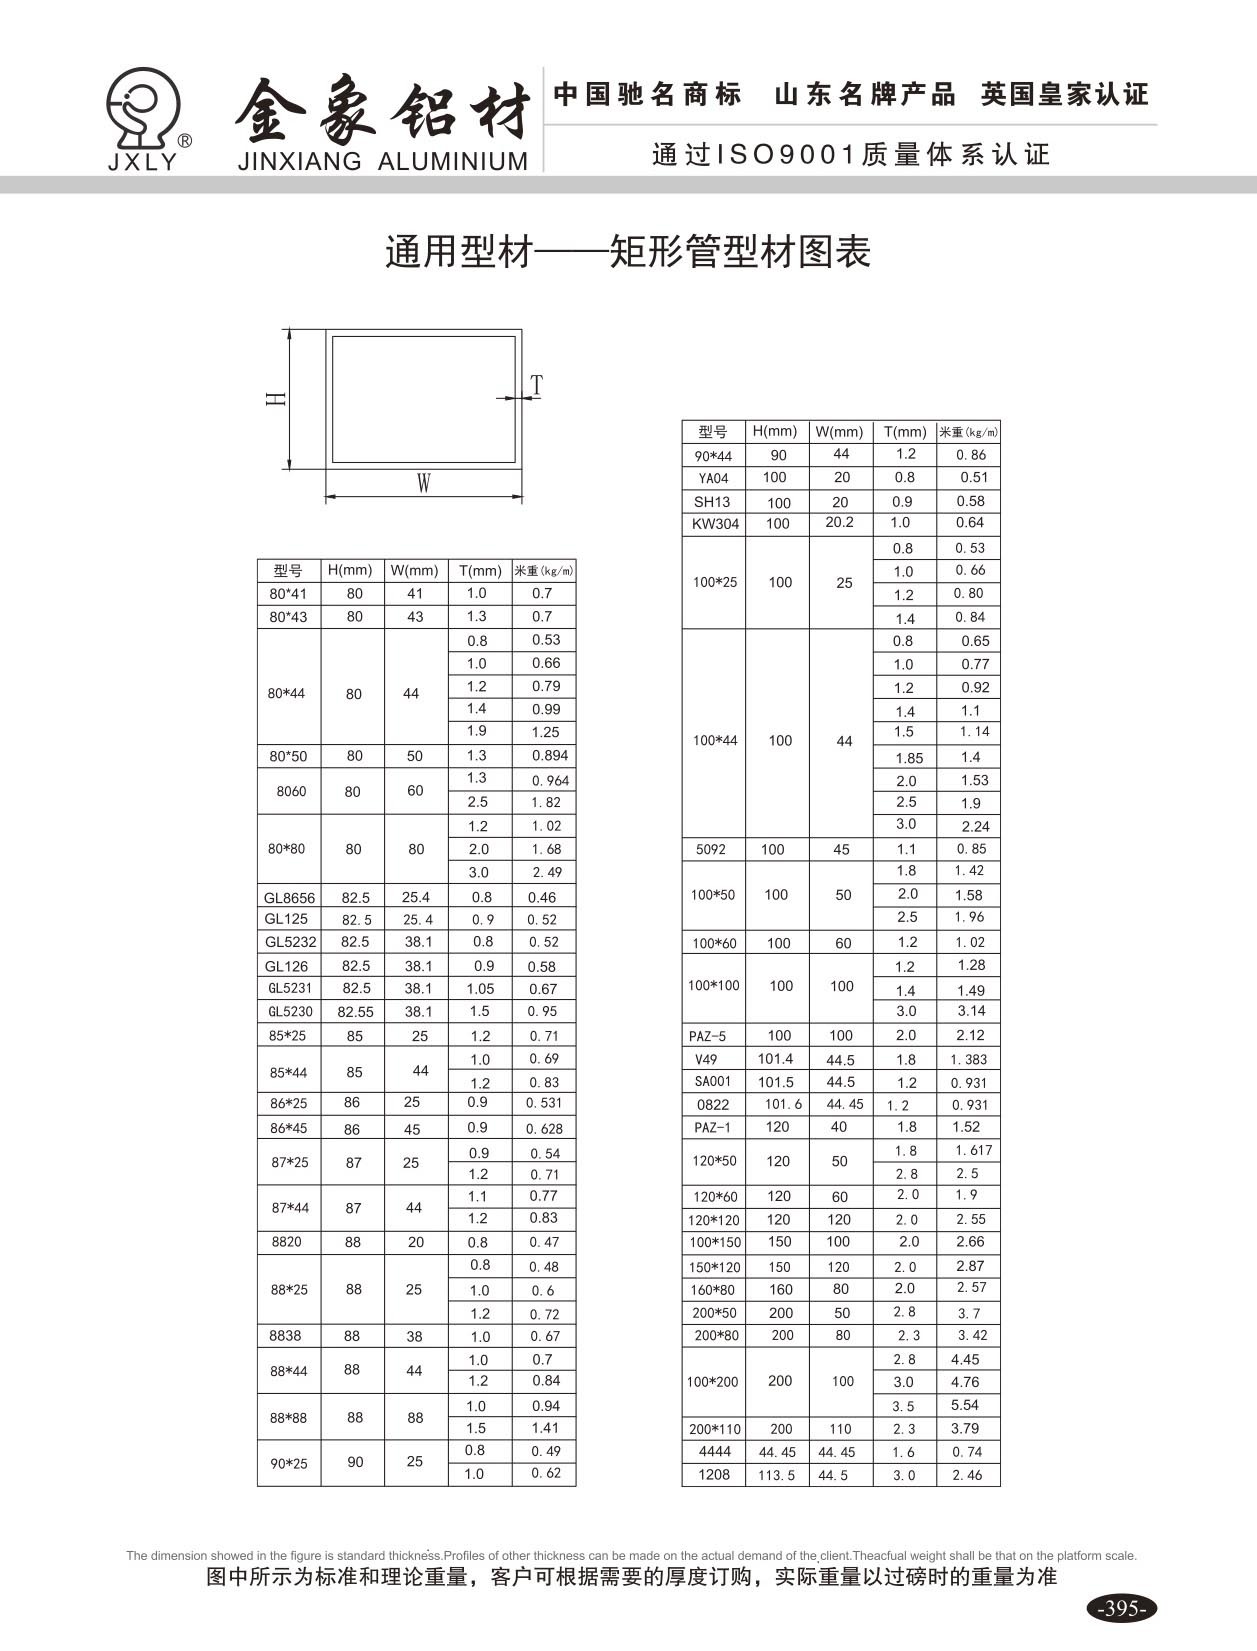 Chart of rectangular tube profiles